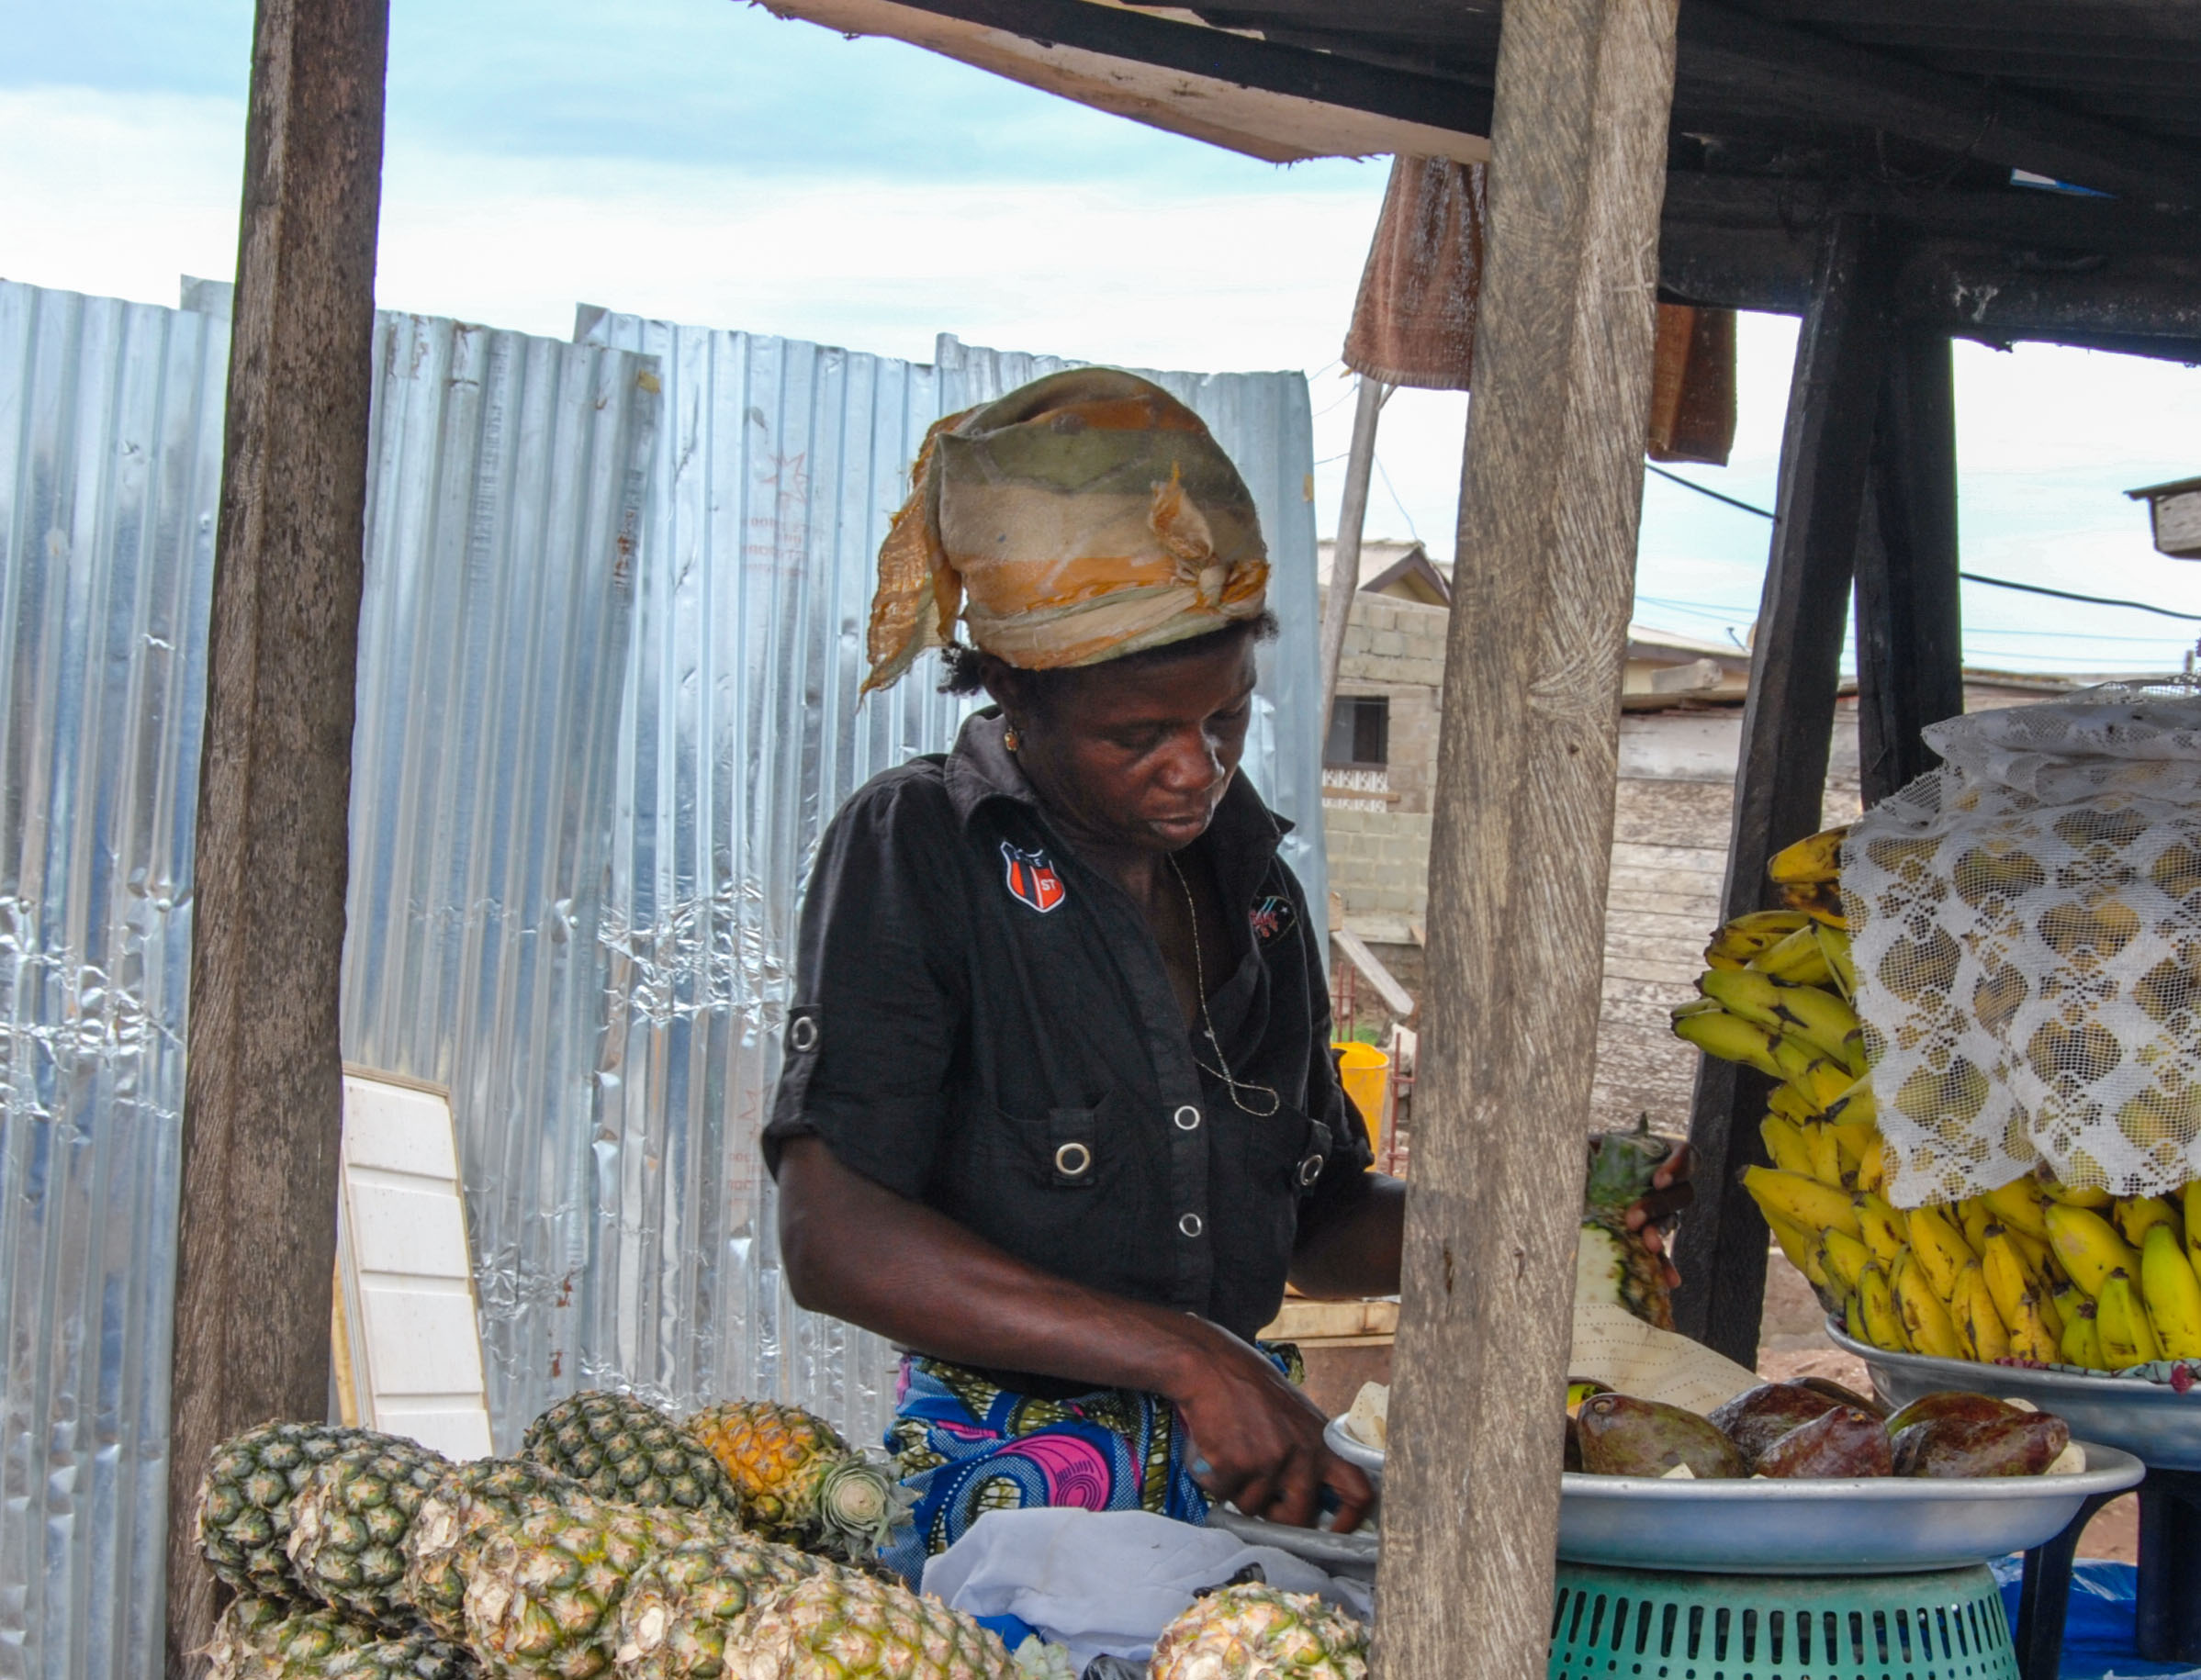 A woman sells pineapples and bananas at a farmer's fresh market in Elmina, Ghana. © 2015 Margus Vilbas / Shutterstock.com